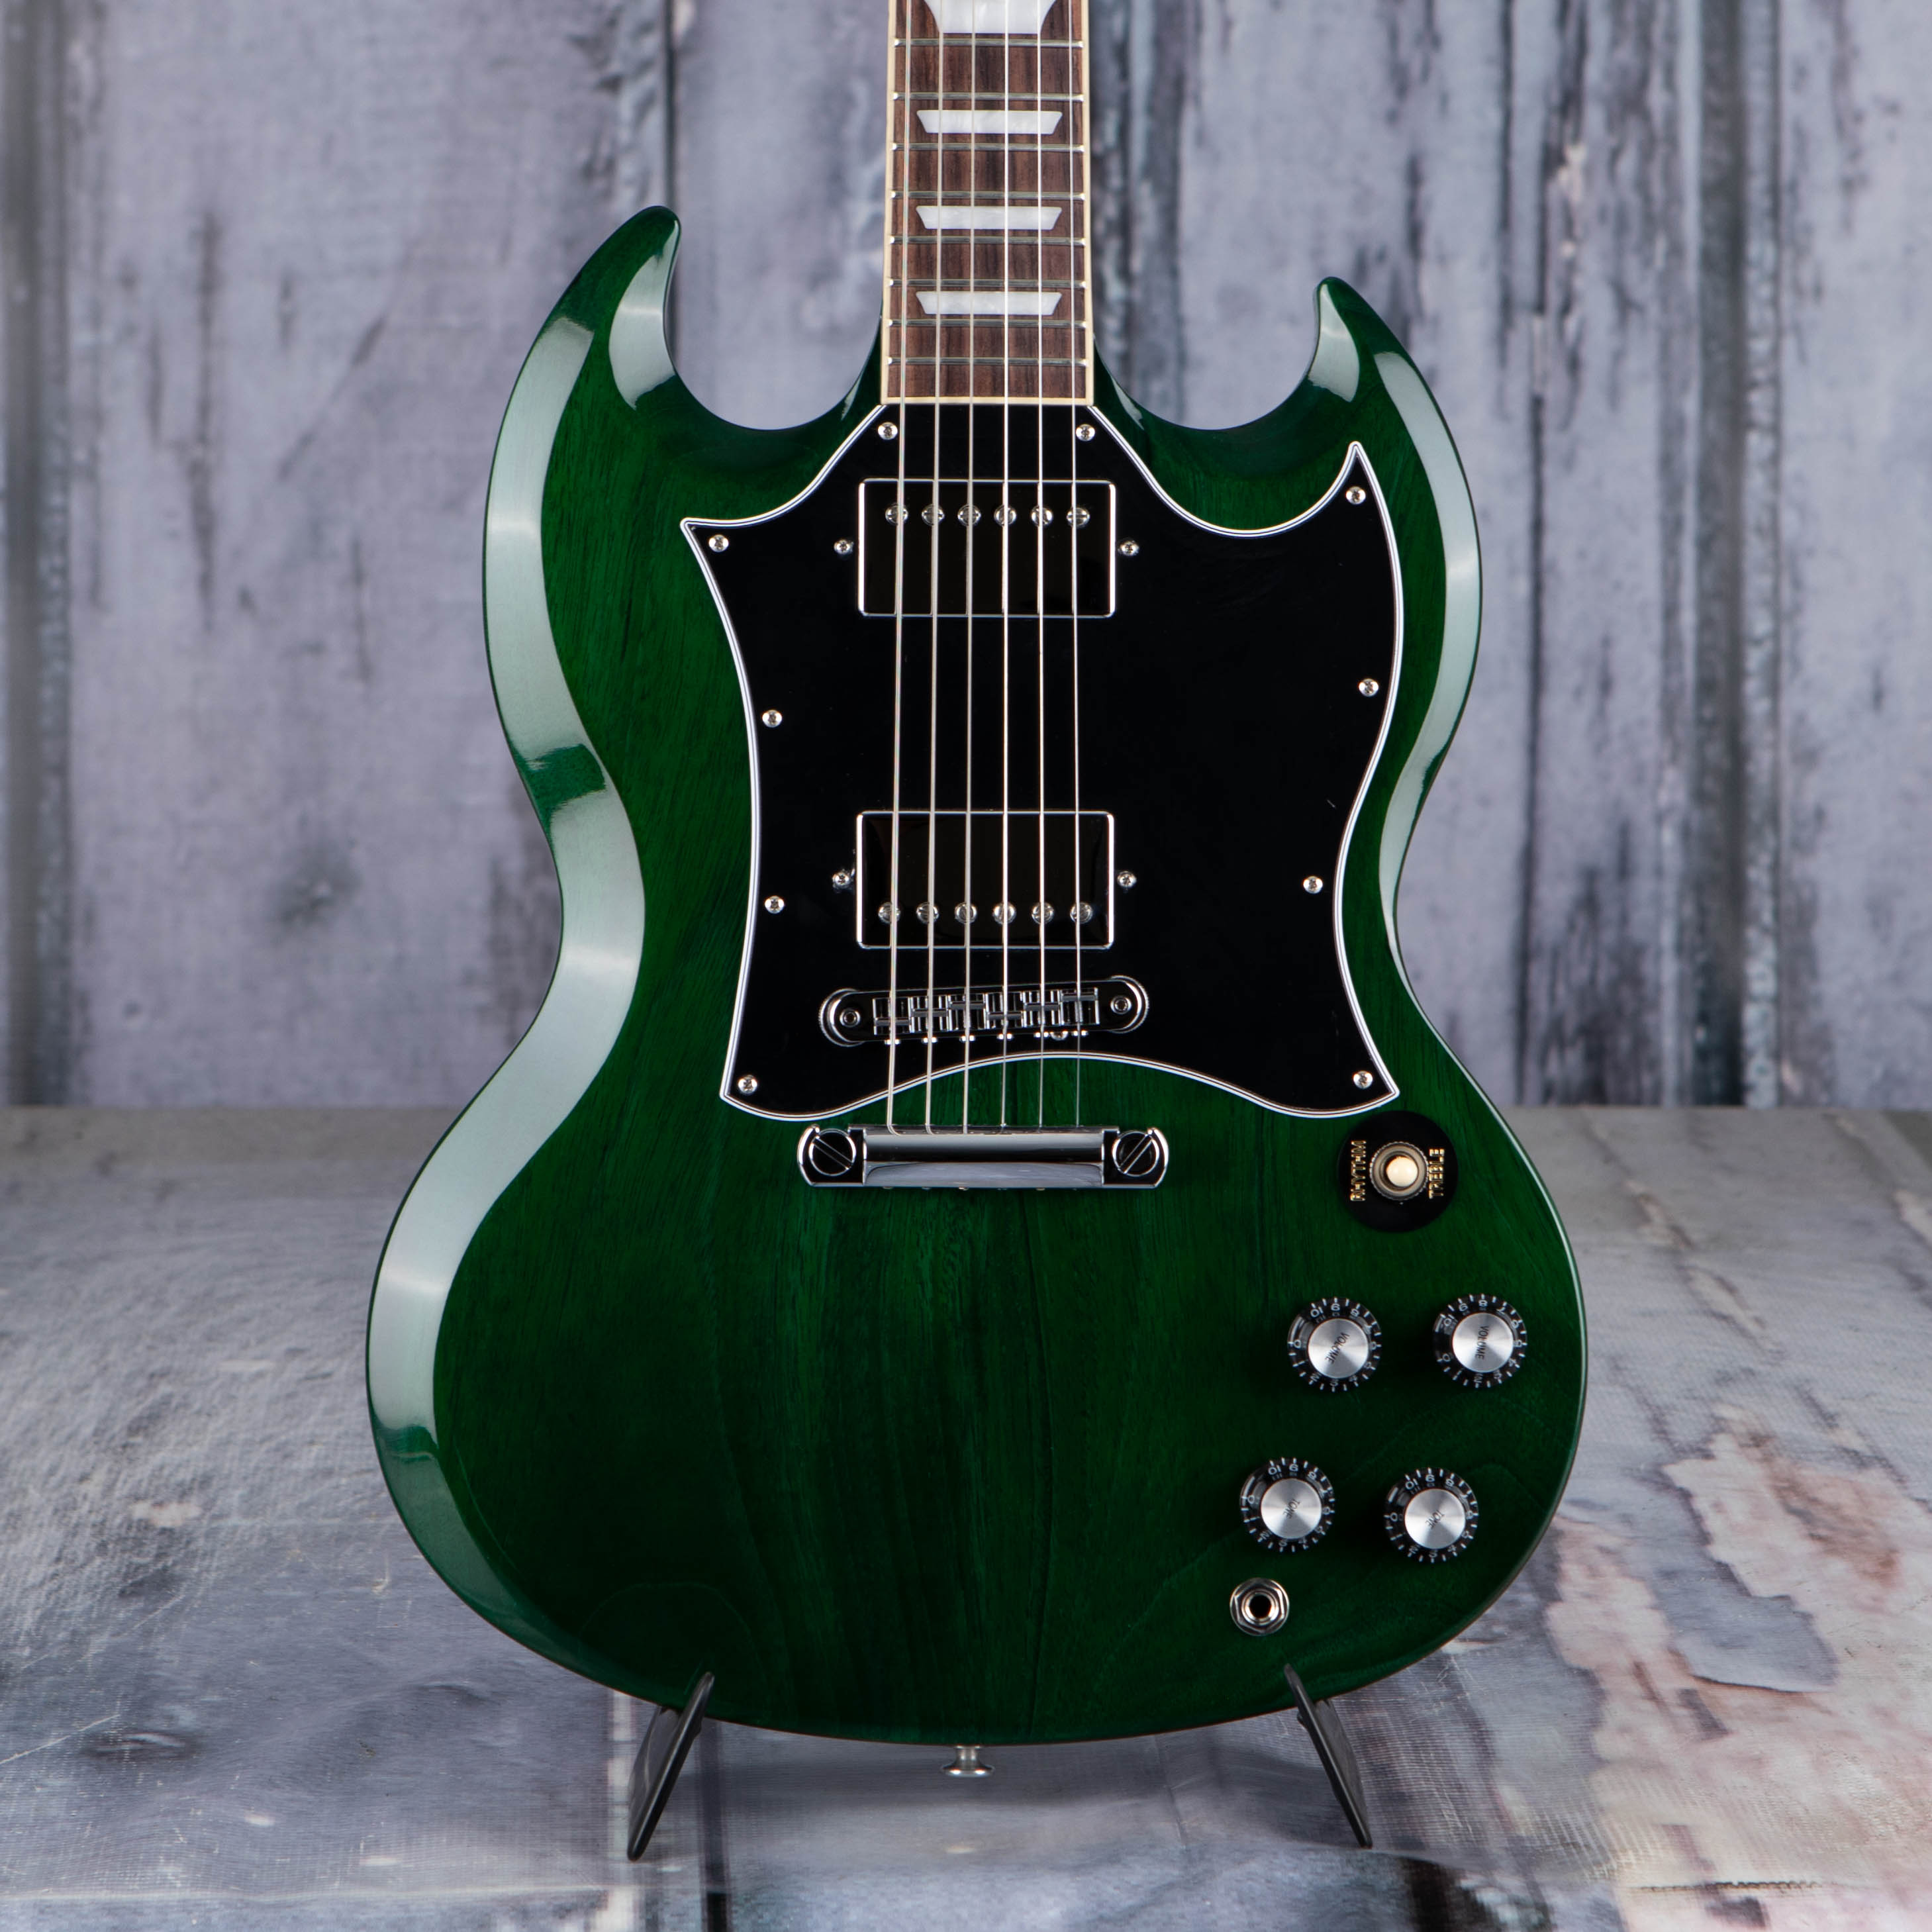 Gibson USA SG Standard Electric Guitar, Translucent Teal